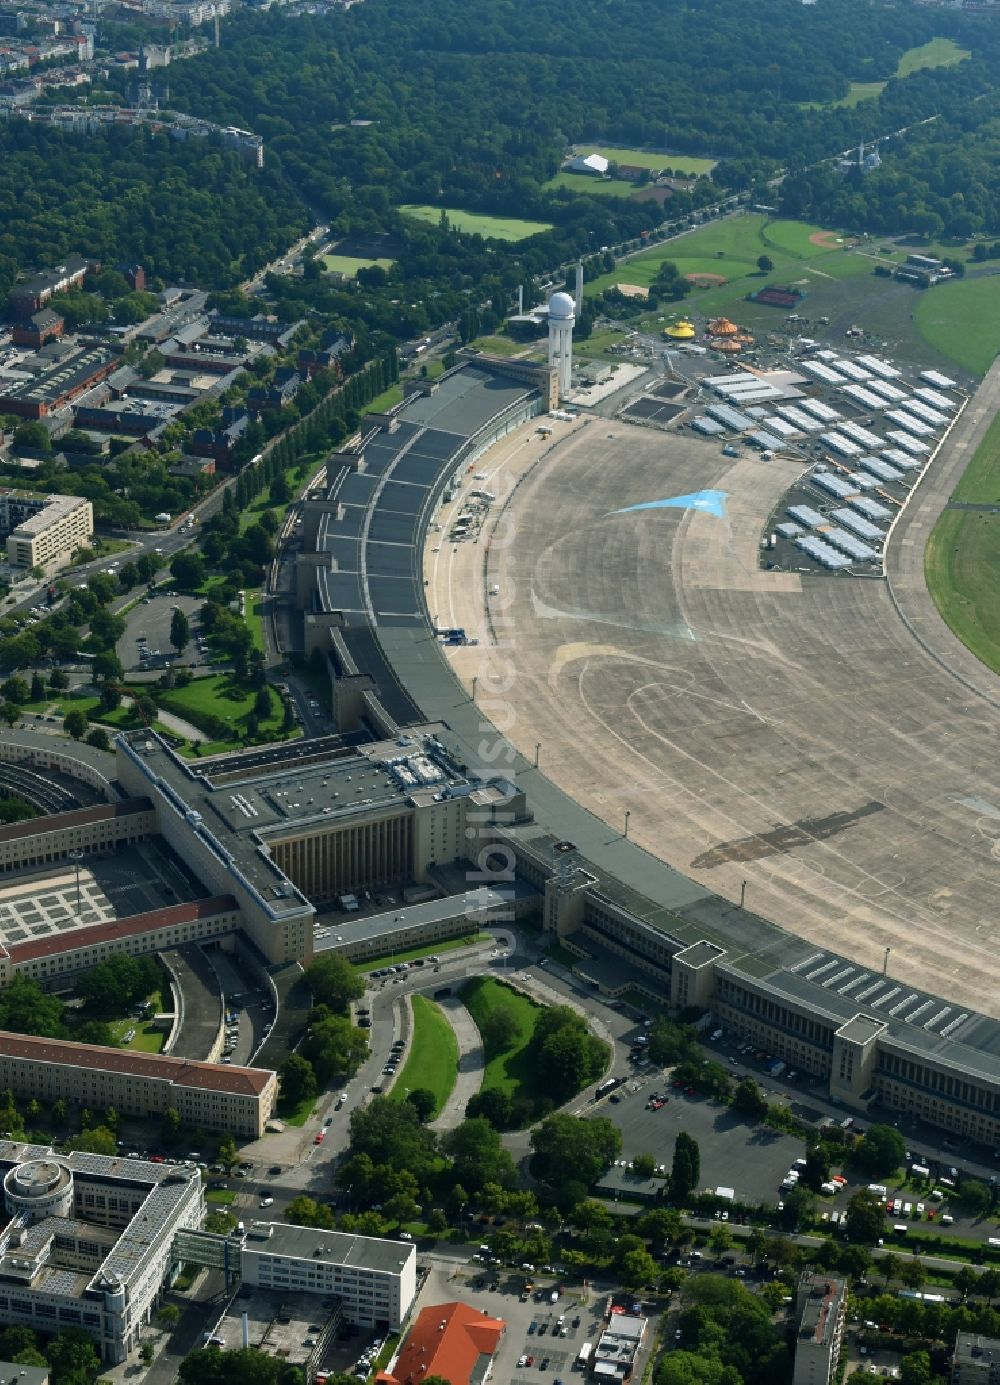 Luftbild Berlin - Gelände des ehemaligen Flughafens Berlin-Tempelhof Tempelhofer Freiheit im Ortsteil Tempelhof in Berlin